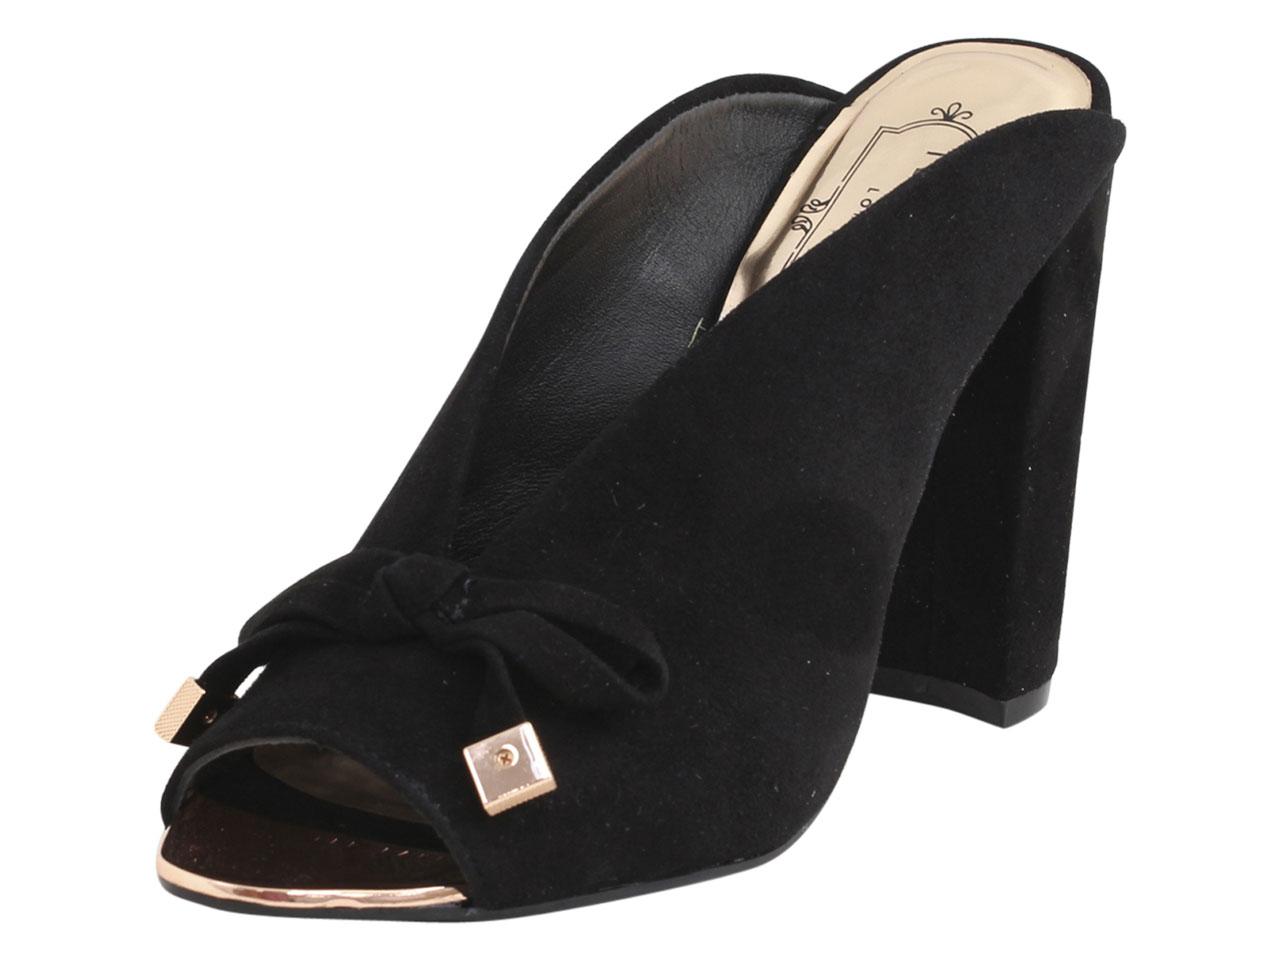 Ted Baker Women's Marinax Pumps Heels Shoes - Black - 8.5 B(M) US